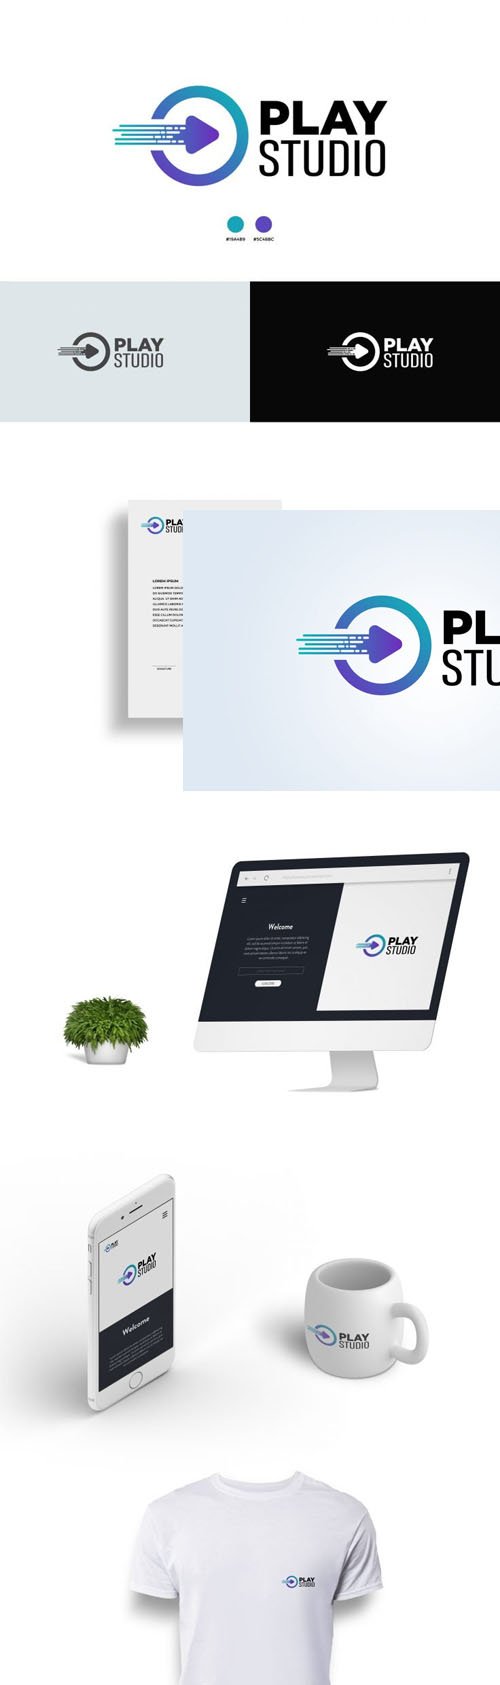 Play Studio Brand Logo Vector Template